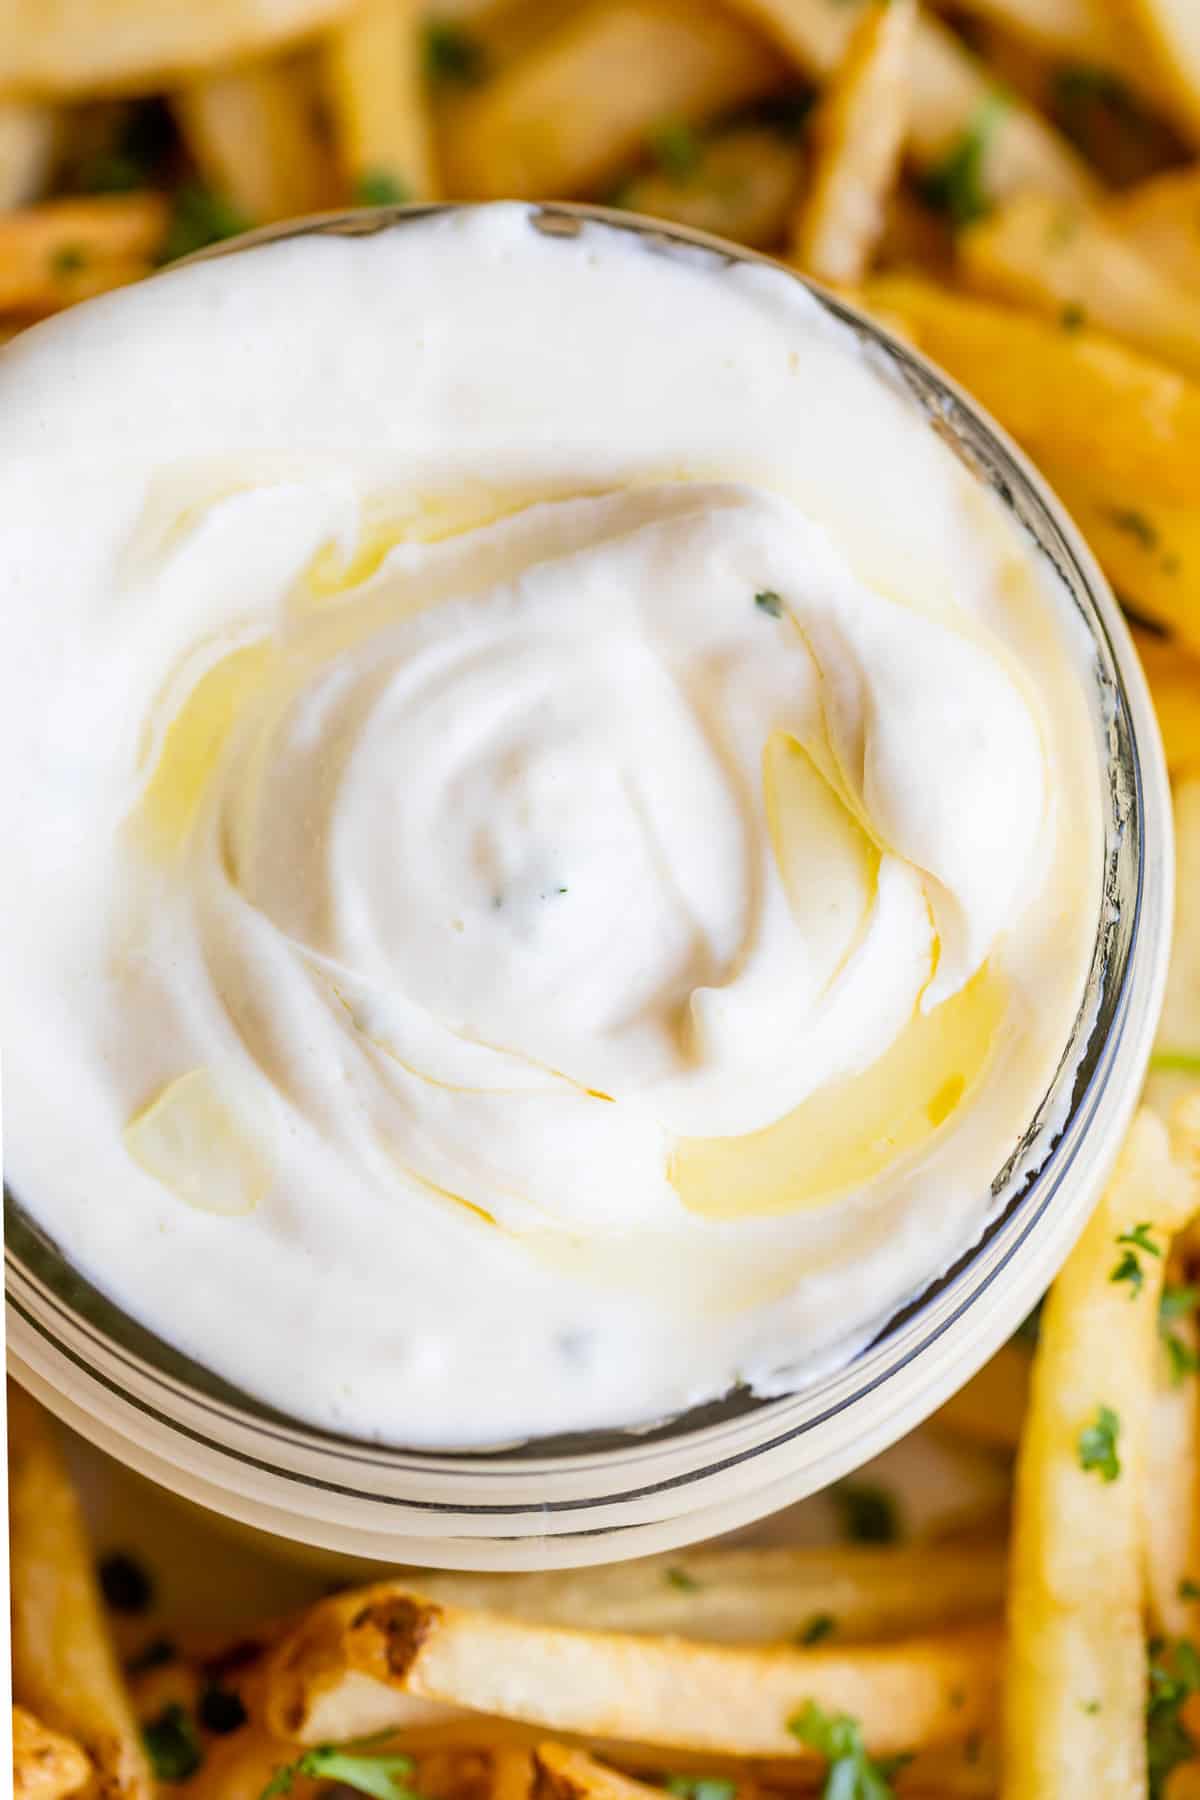 Homemade Garlic Aioli Sauce Two Ways - The Food Charlatan